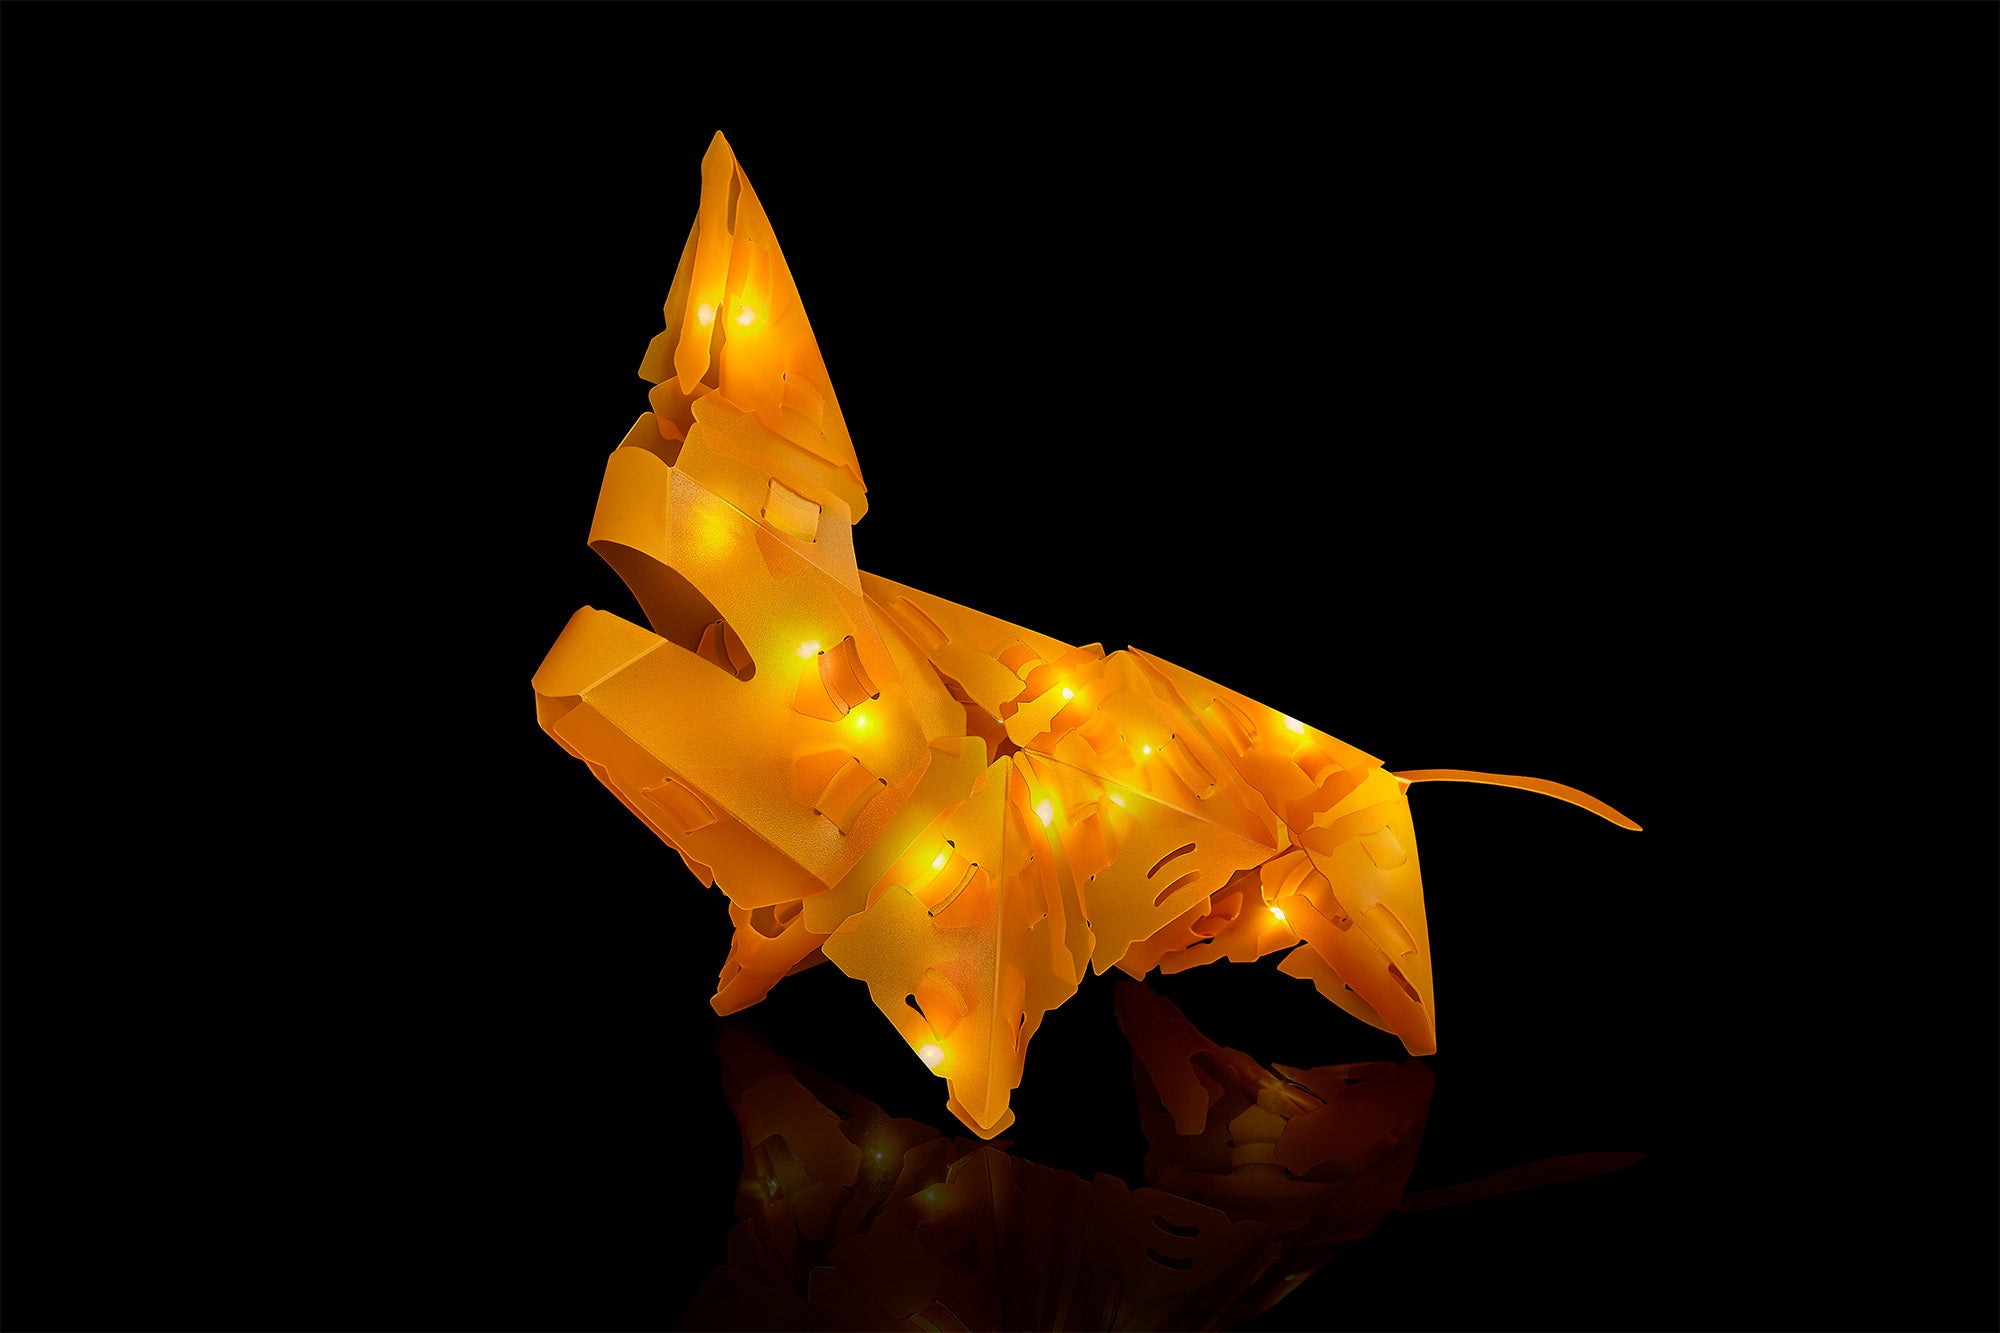 Creatto Lion - LED Light Up Crafting Kit    